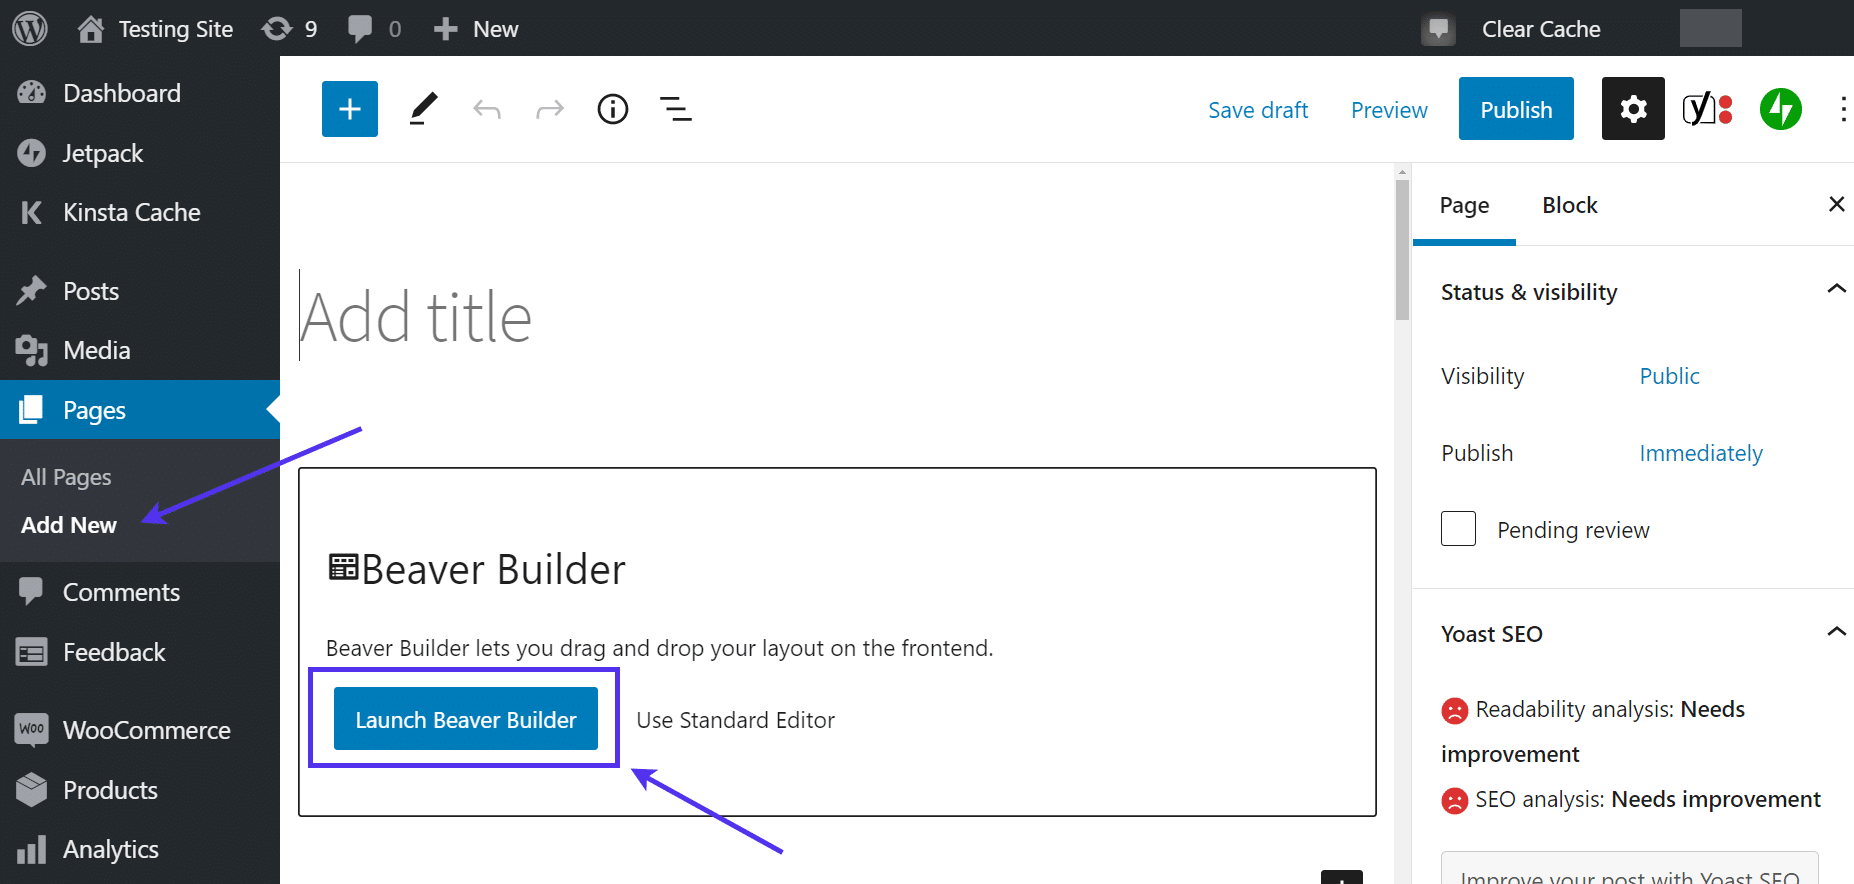 Click the 'Launch Beaver Builder' button